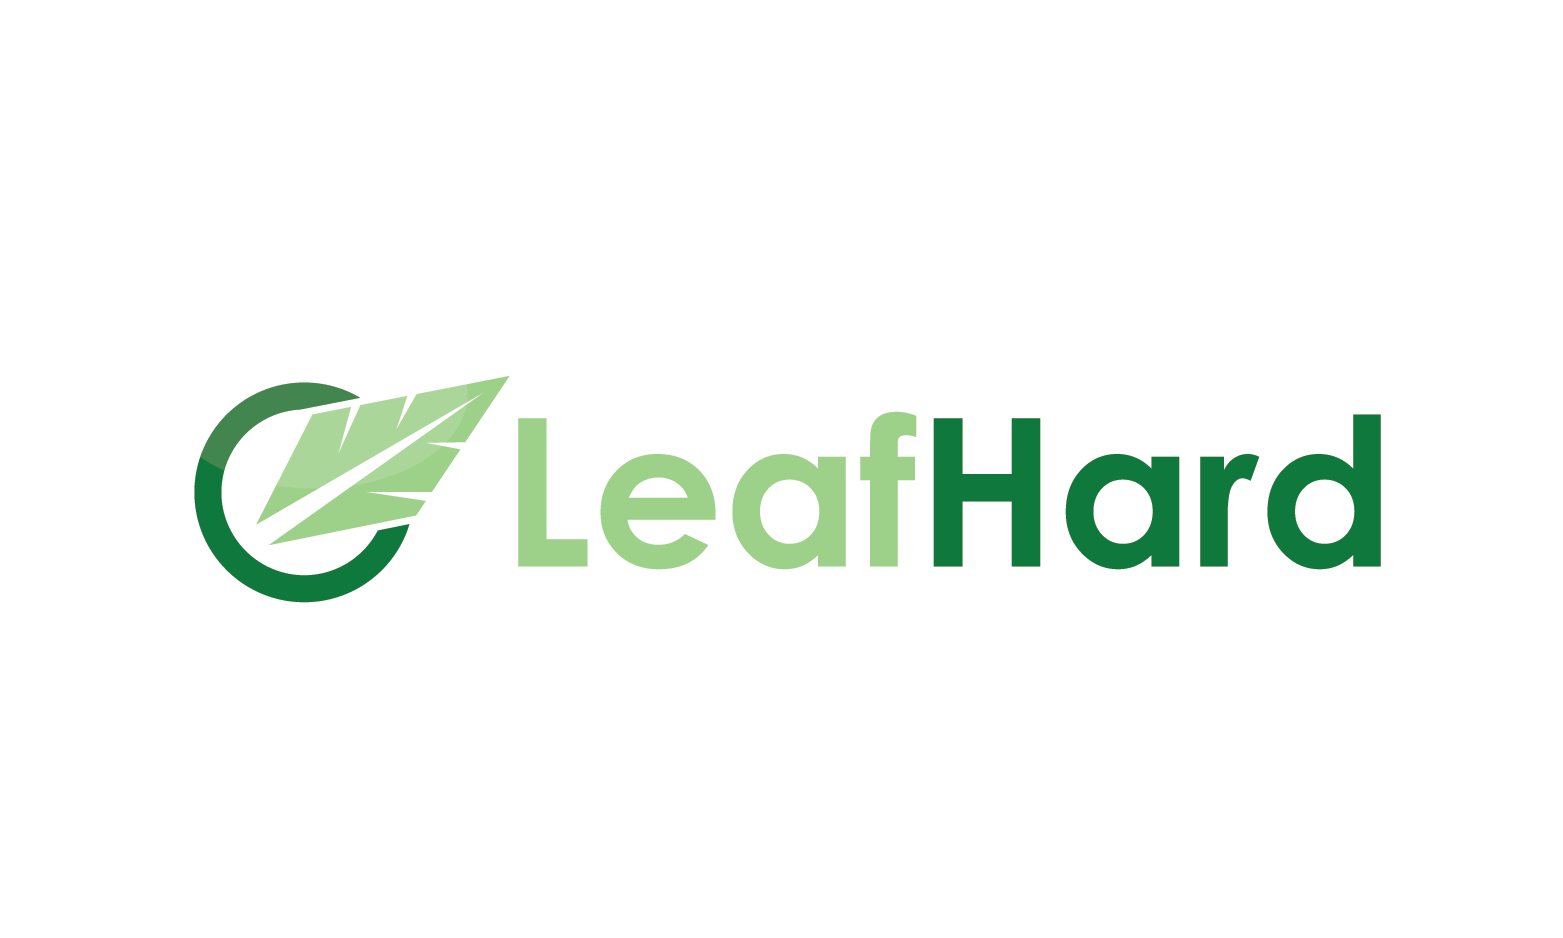 LeafHard.com - Creative brandable domain for sale